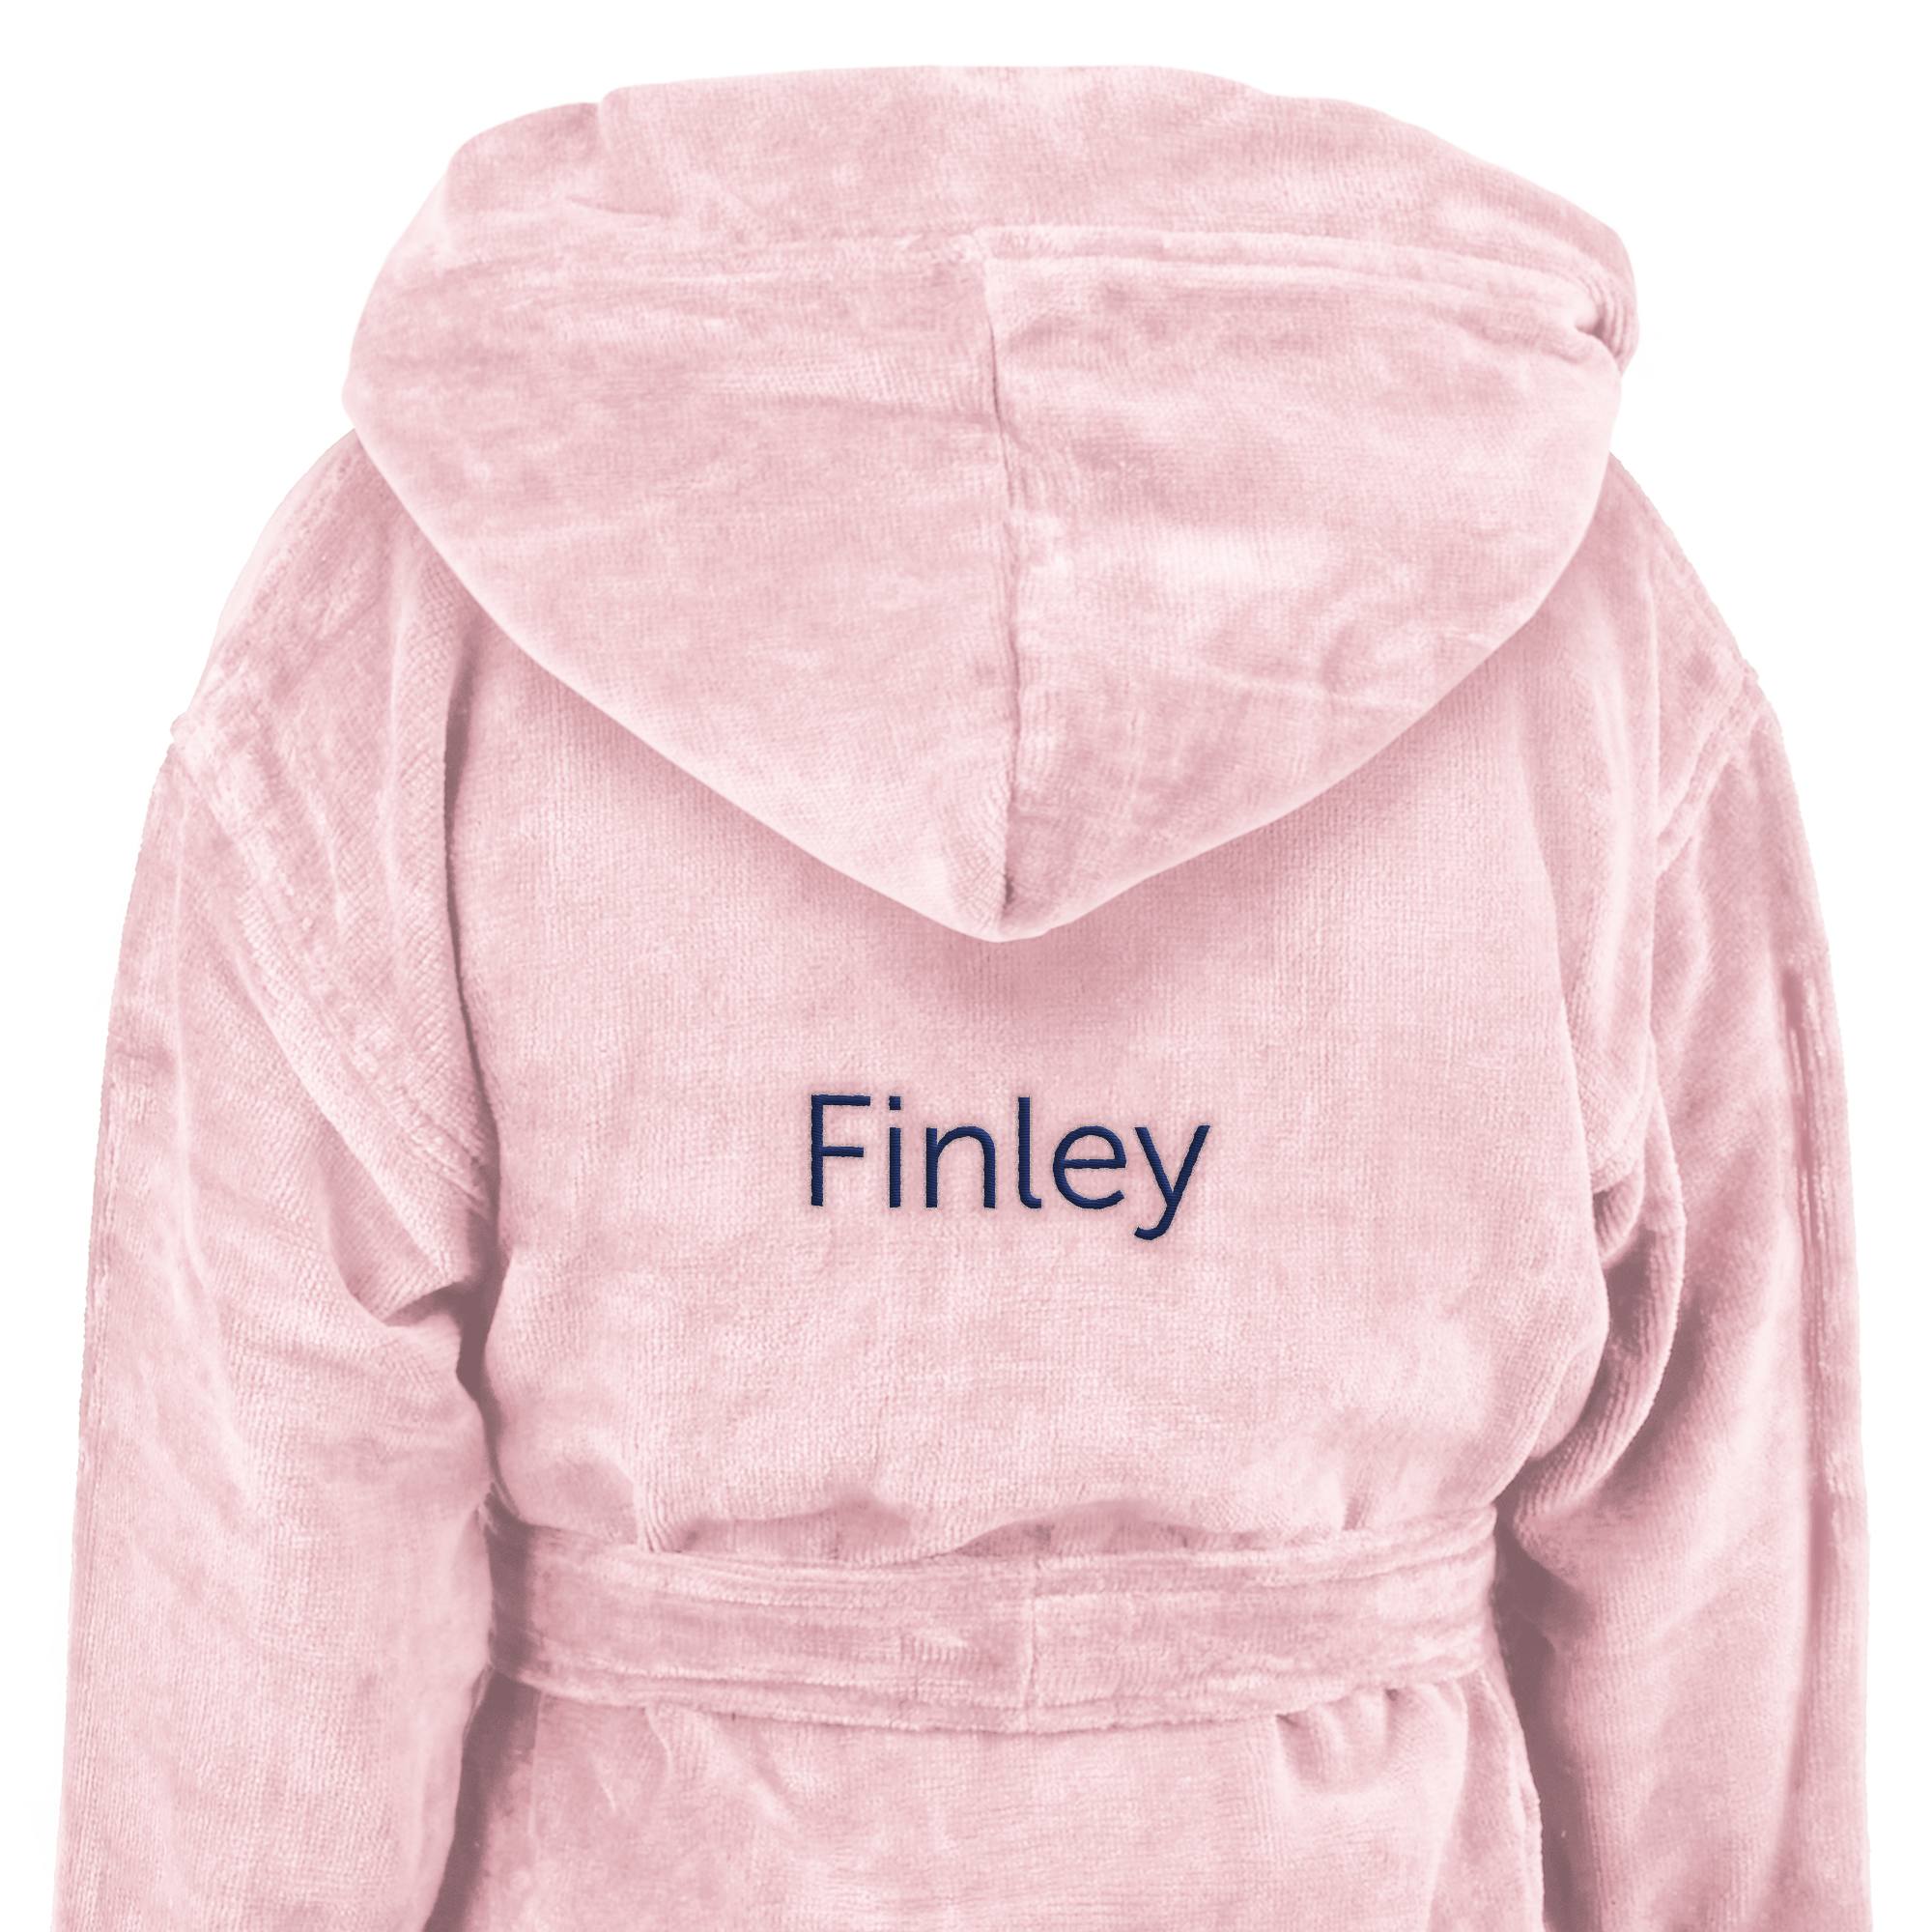 Personalised kids bathrobe - Pink - 4-6 yrs